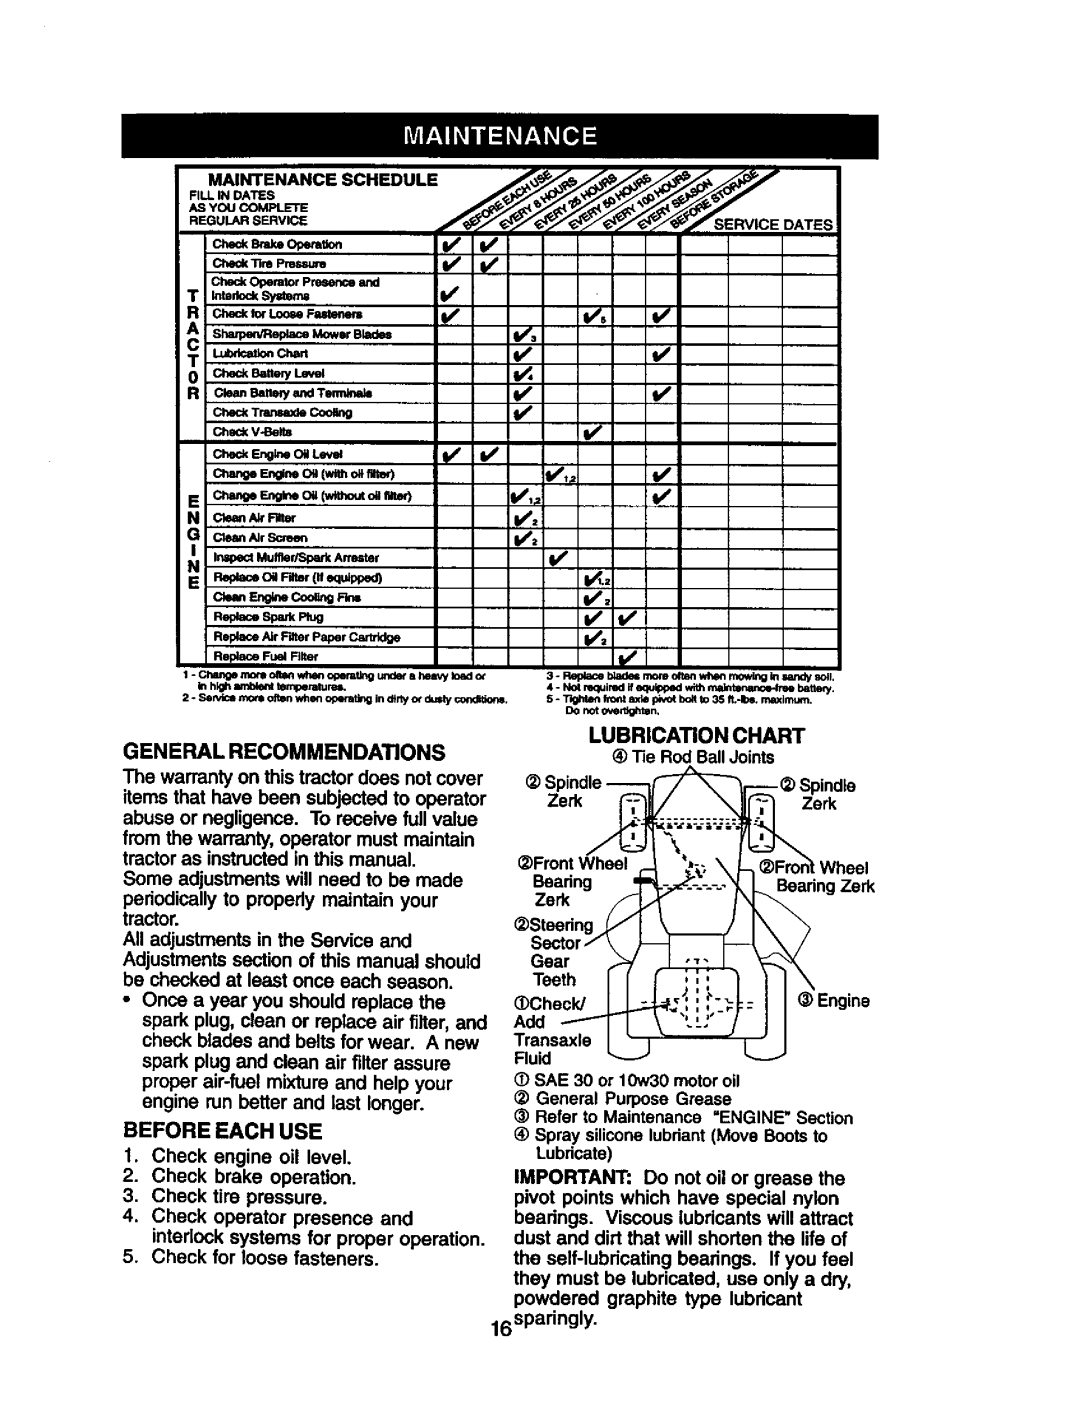 Craftsman 917.274953 manual Lubrication Chart, 16sparingly 